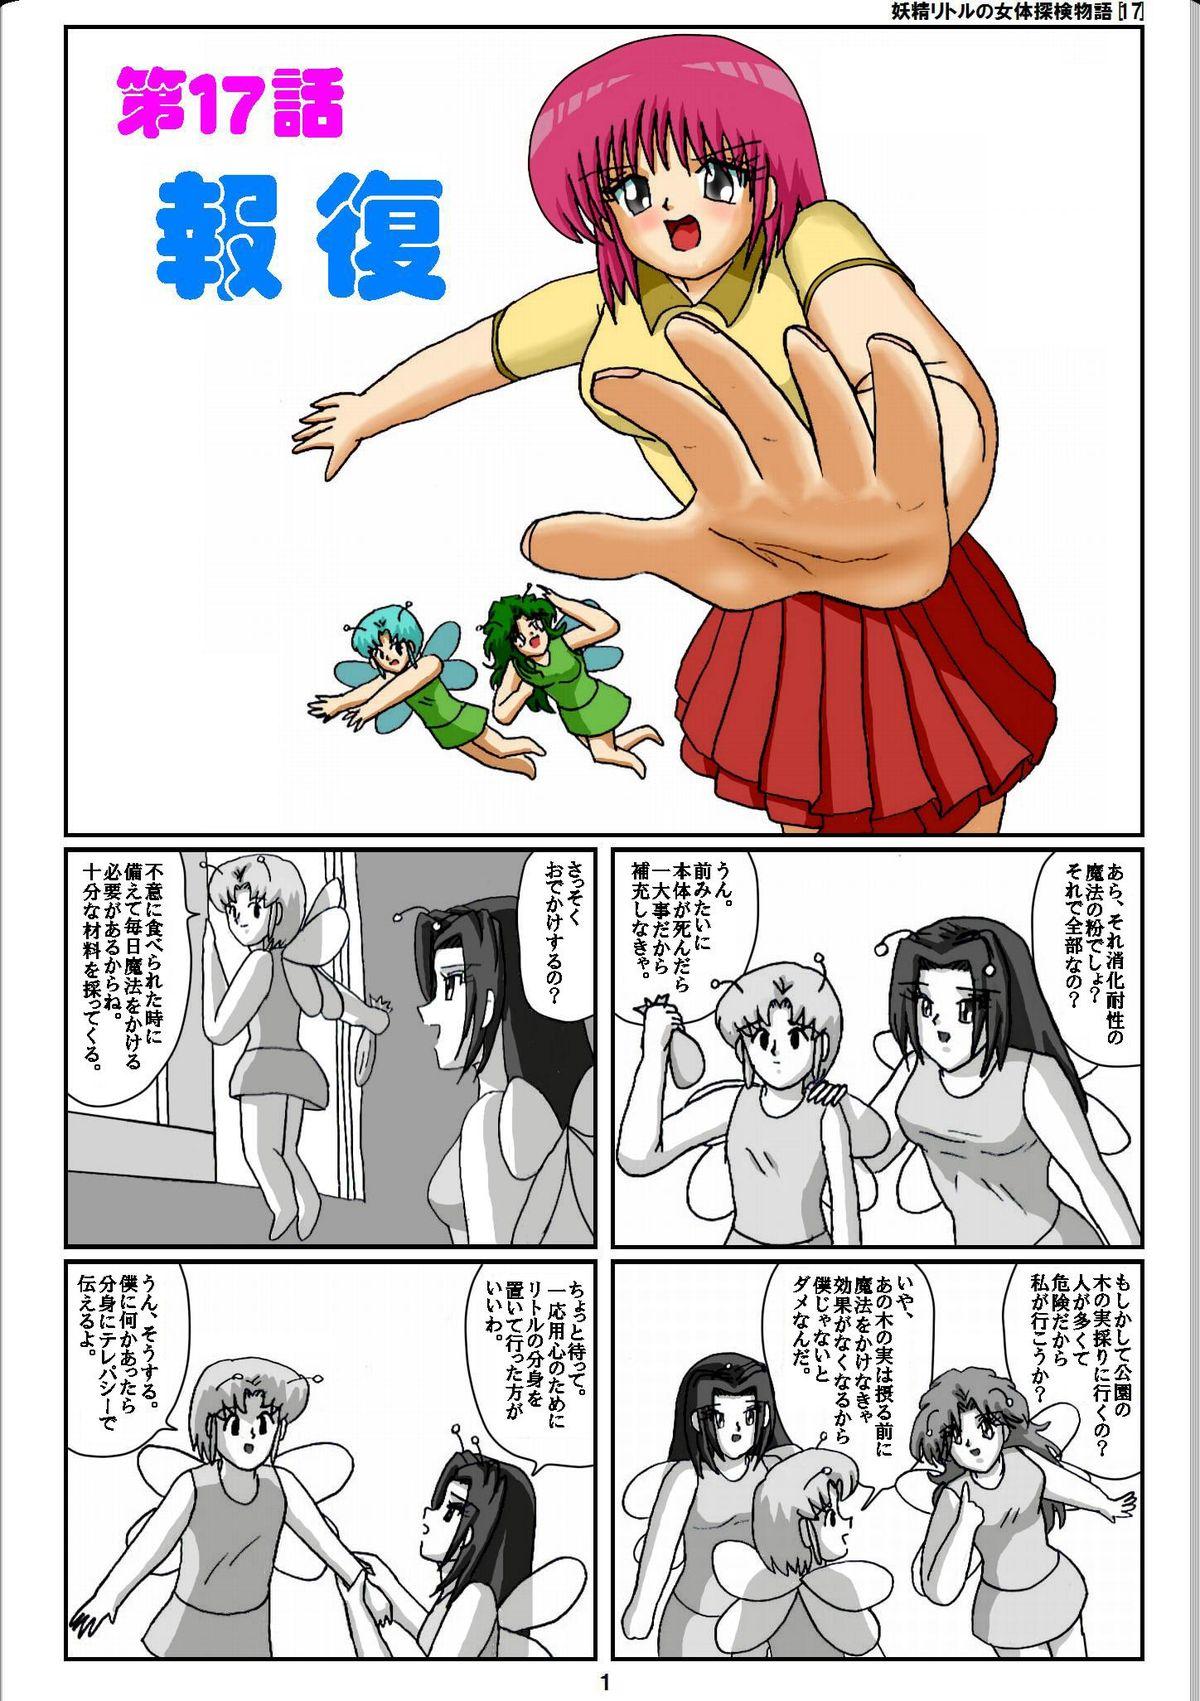 Submissive Yousei Little no Nyotai Tanken Monogatari Art - Picture 1